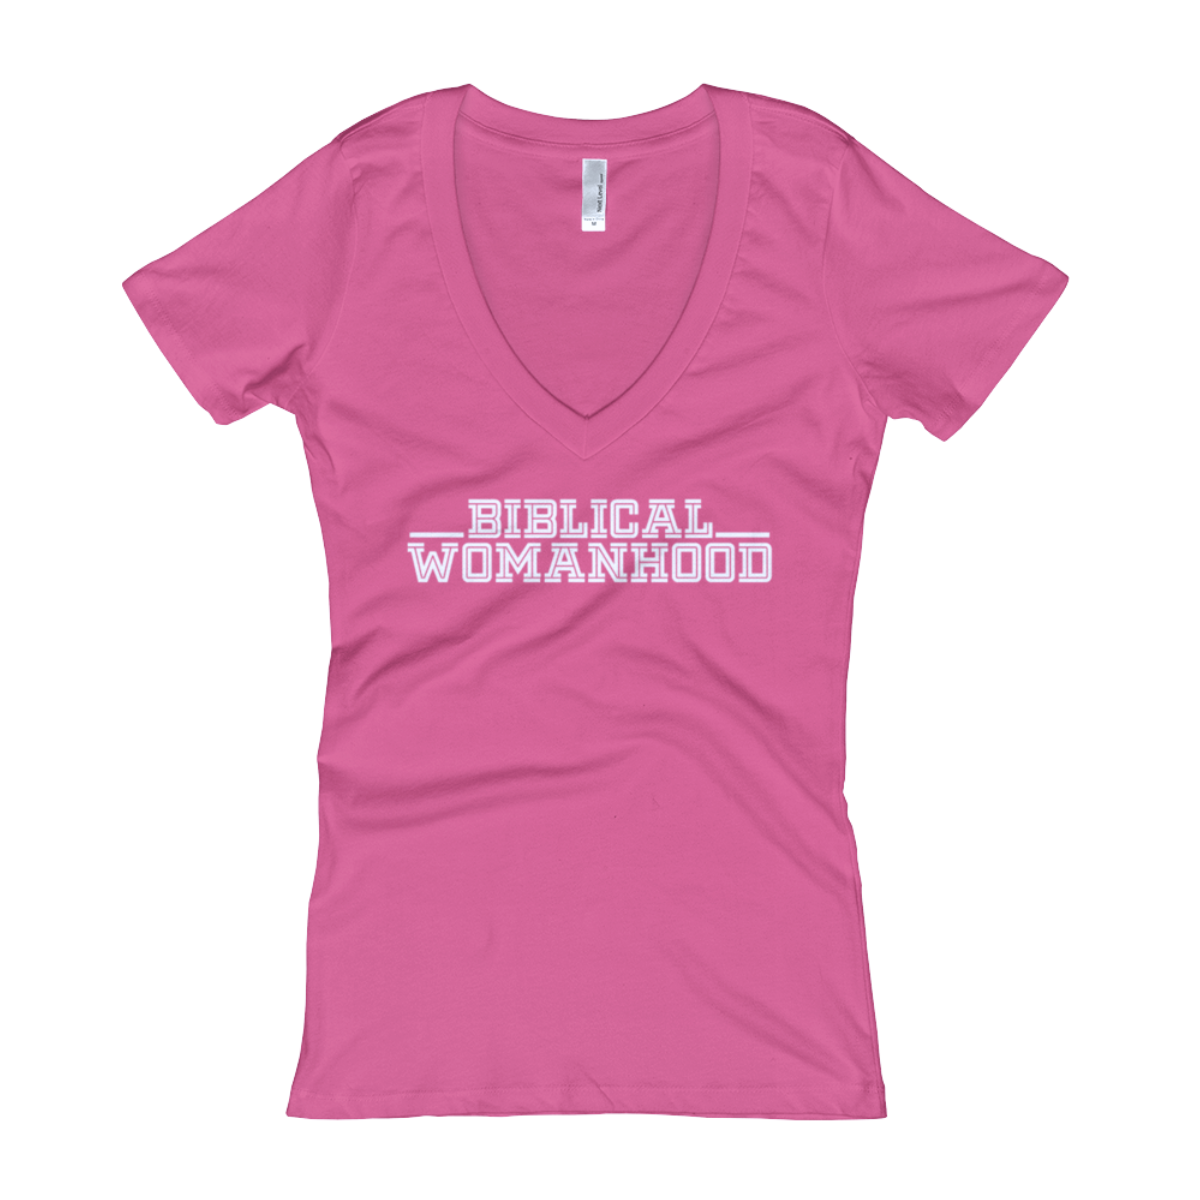 Biblical Womanhood T-shirt V-Neck Pink